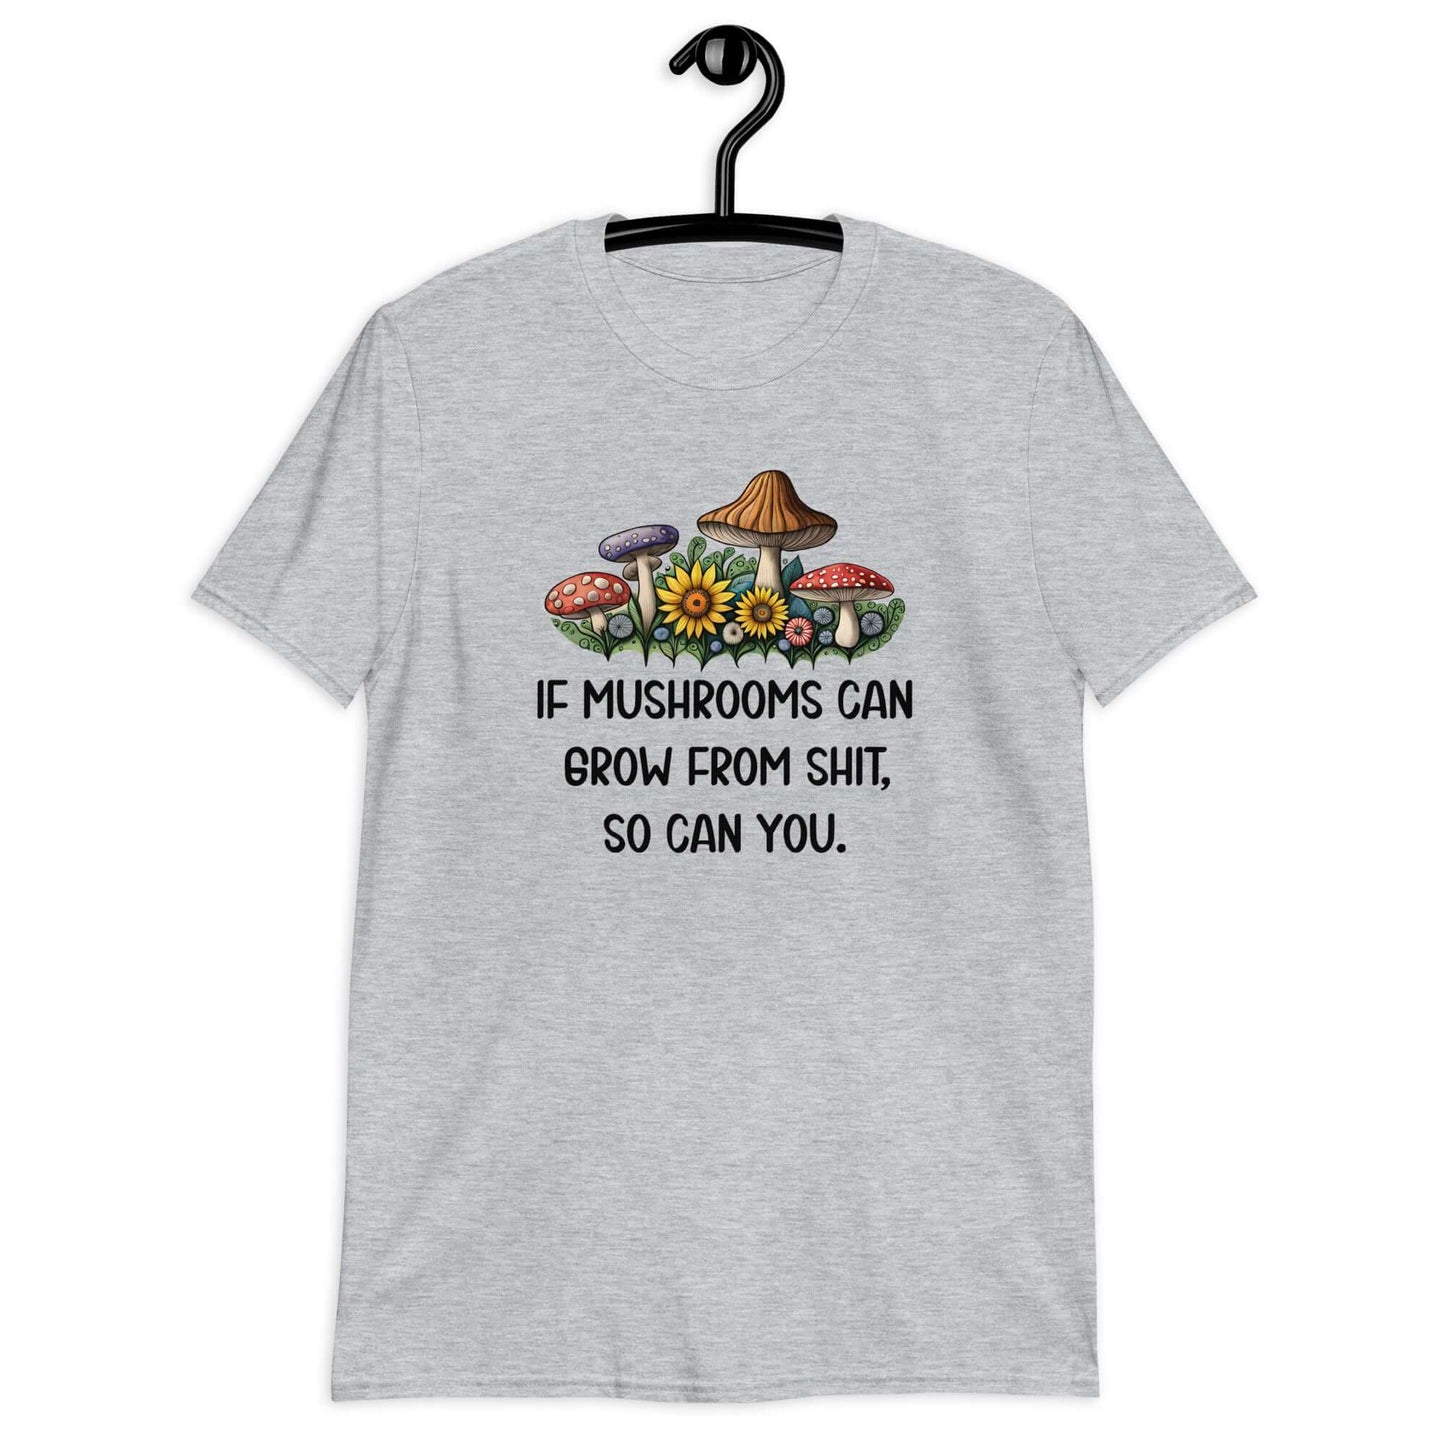 Mushrooms can grow so can you T-Shirt